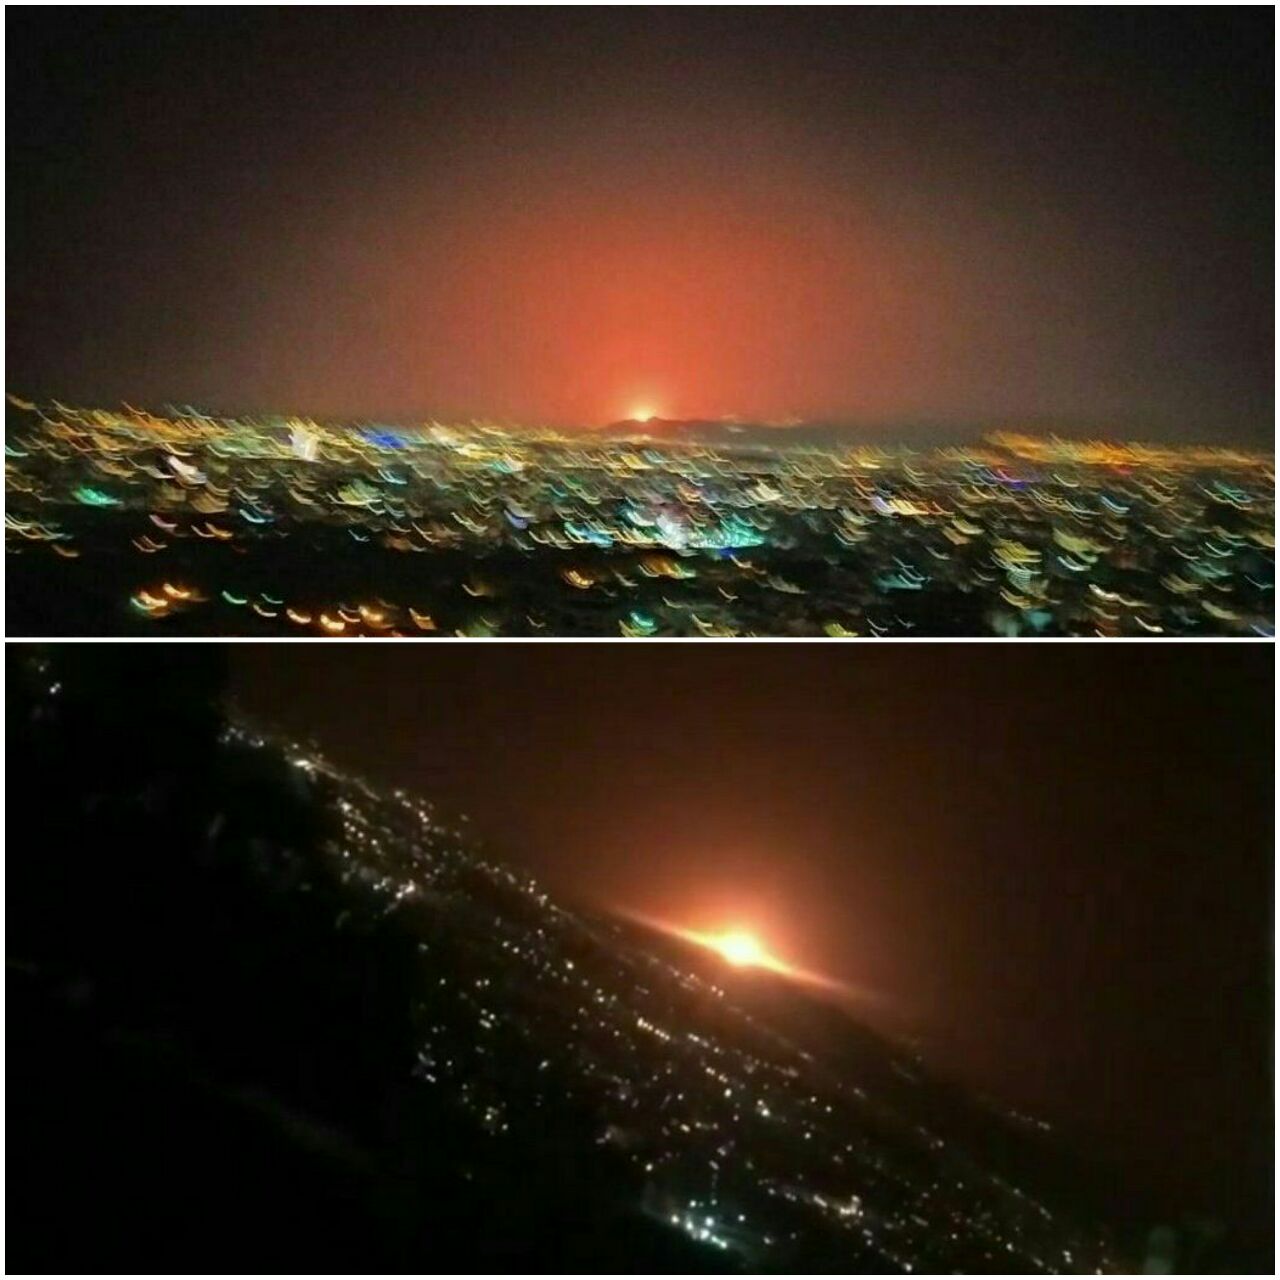 انفجار در شرق تهران